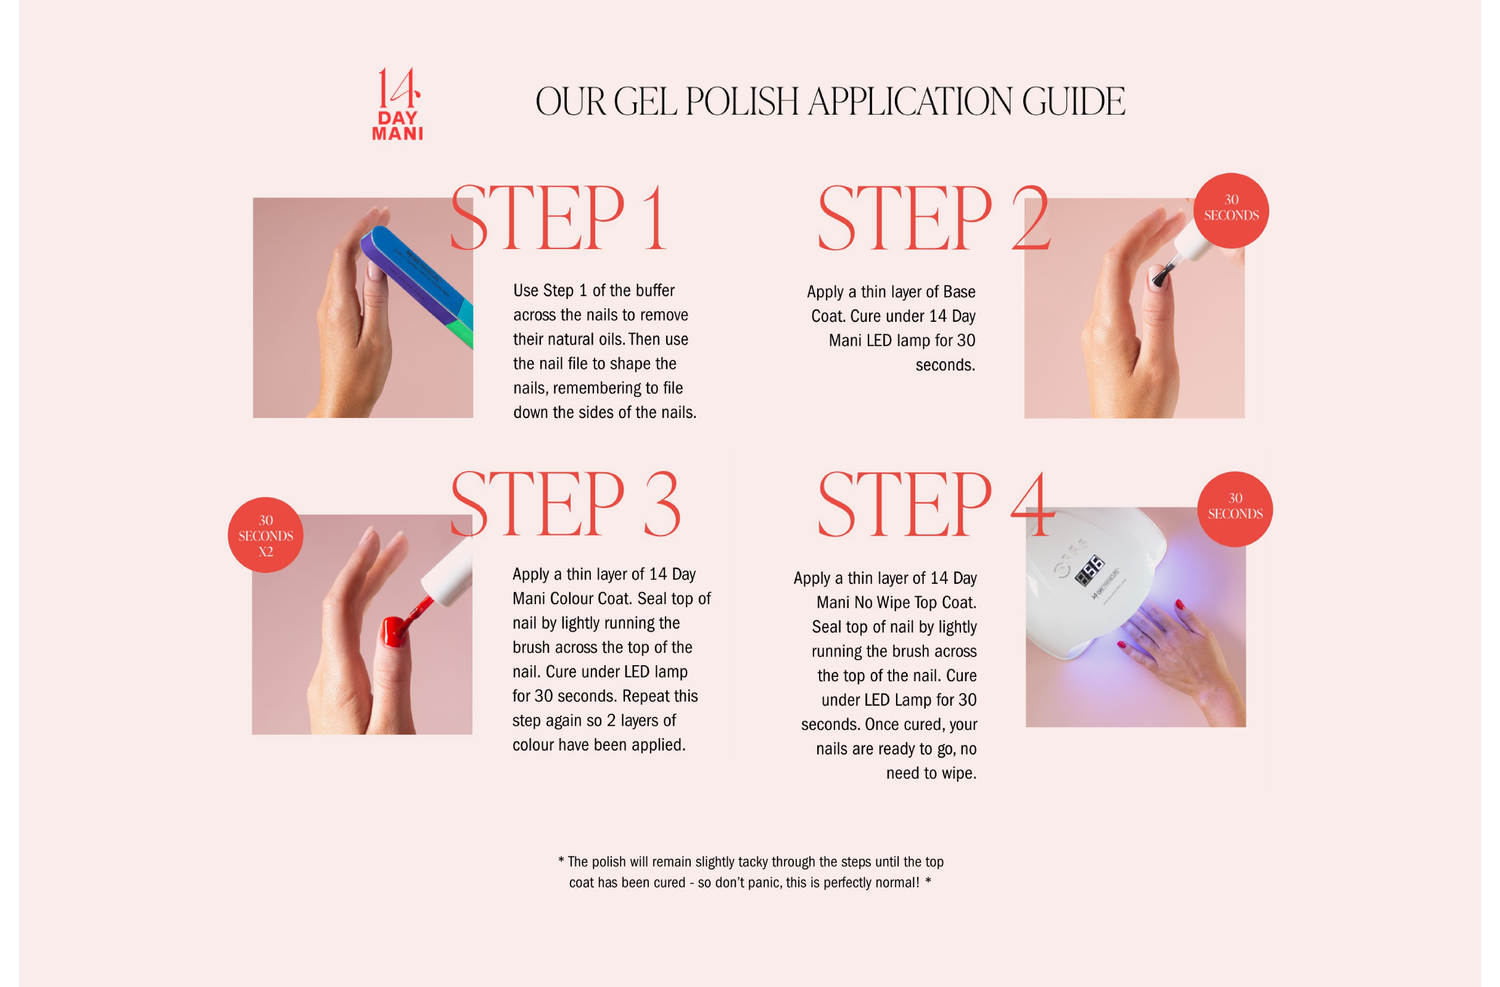 14 Day Manicure Gel Polish Application Guide Desktop